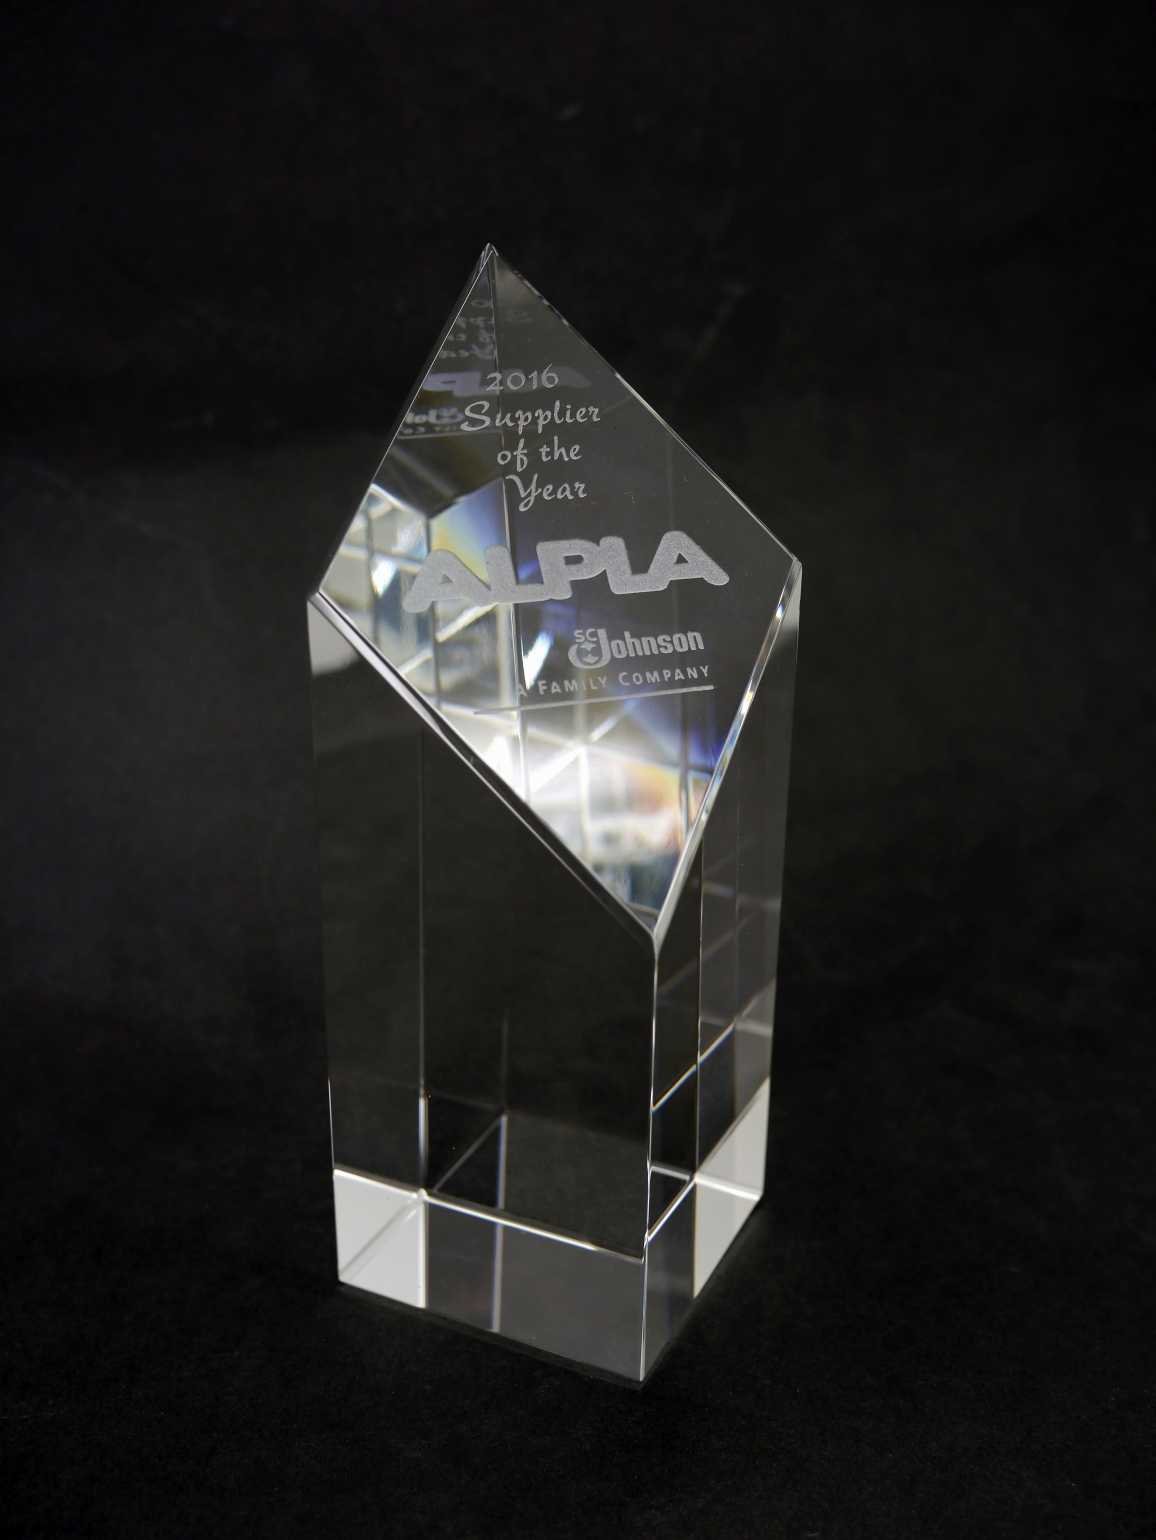 Top Supplier Award from SC Johnson.